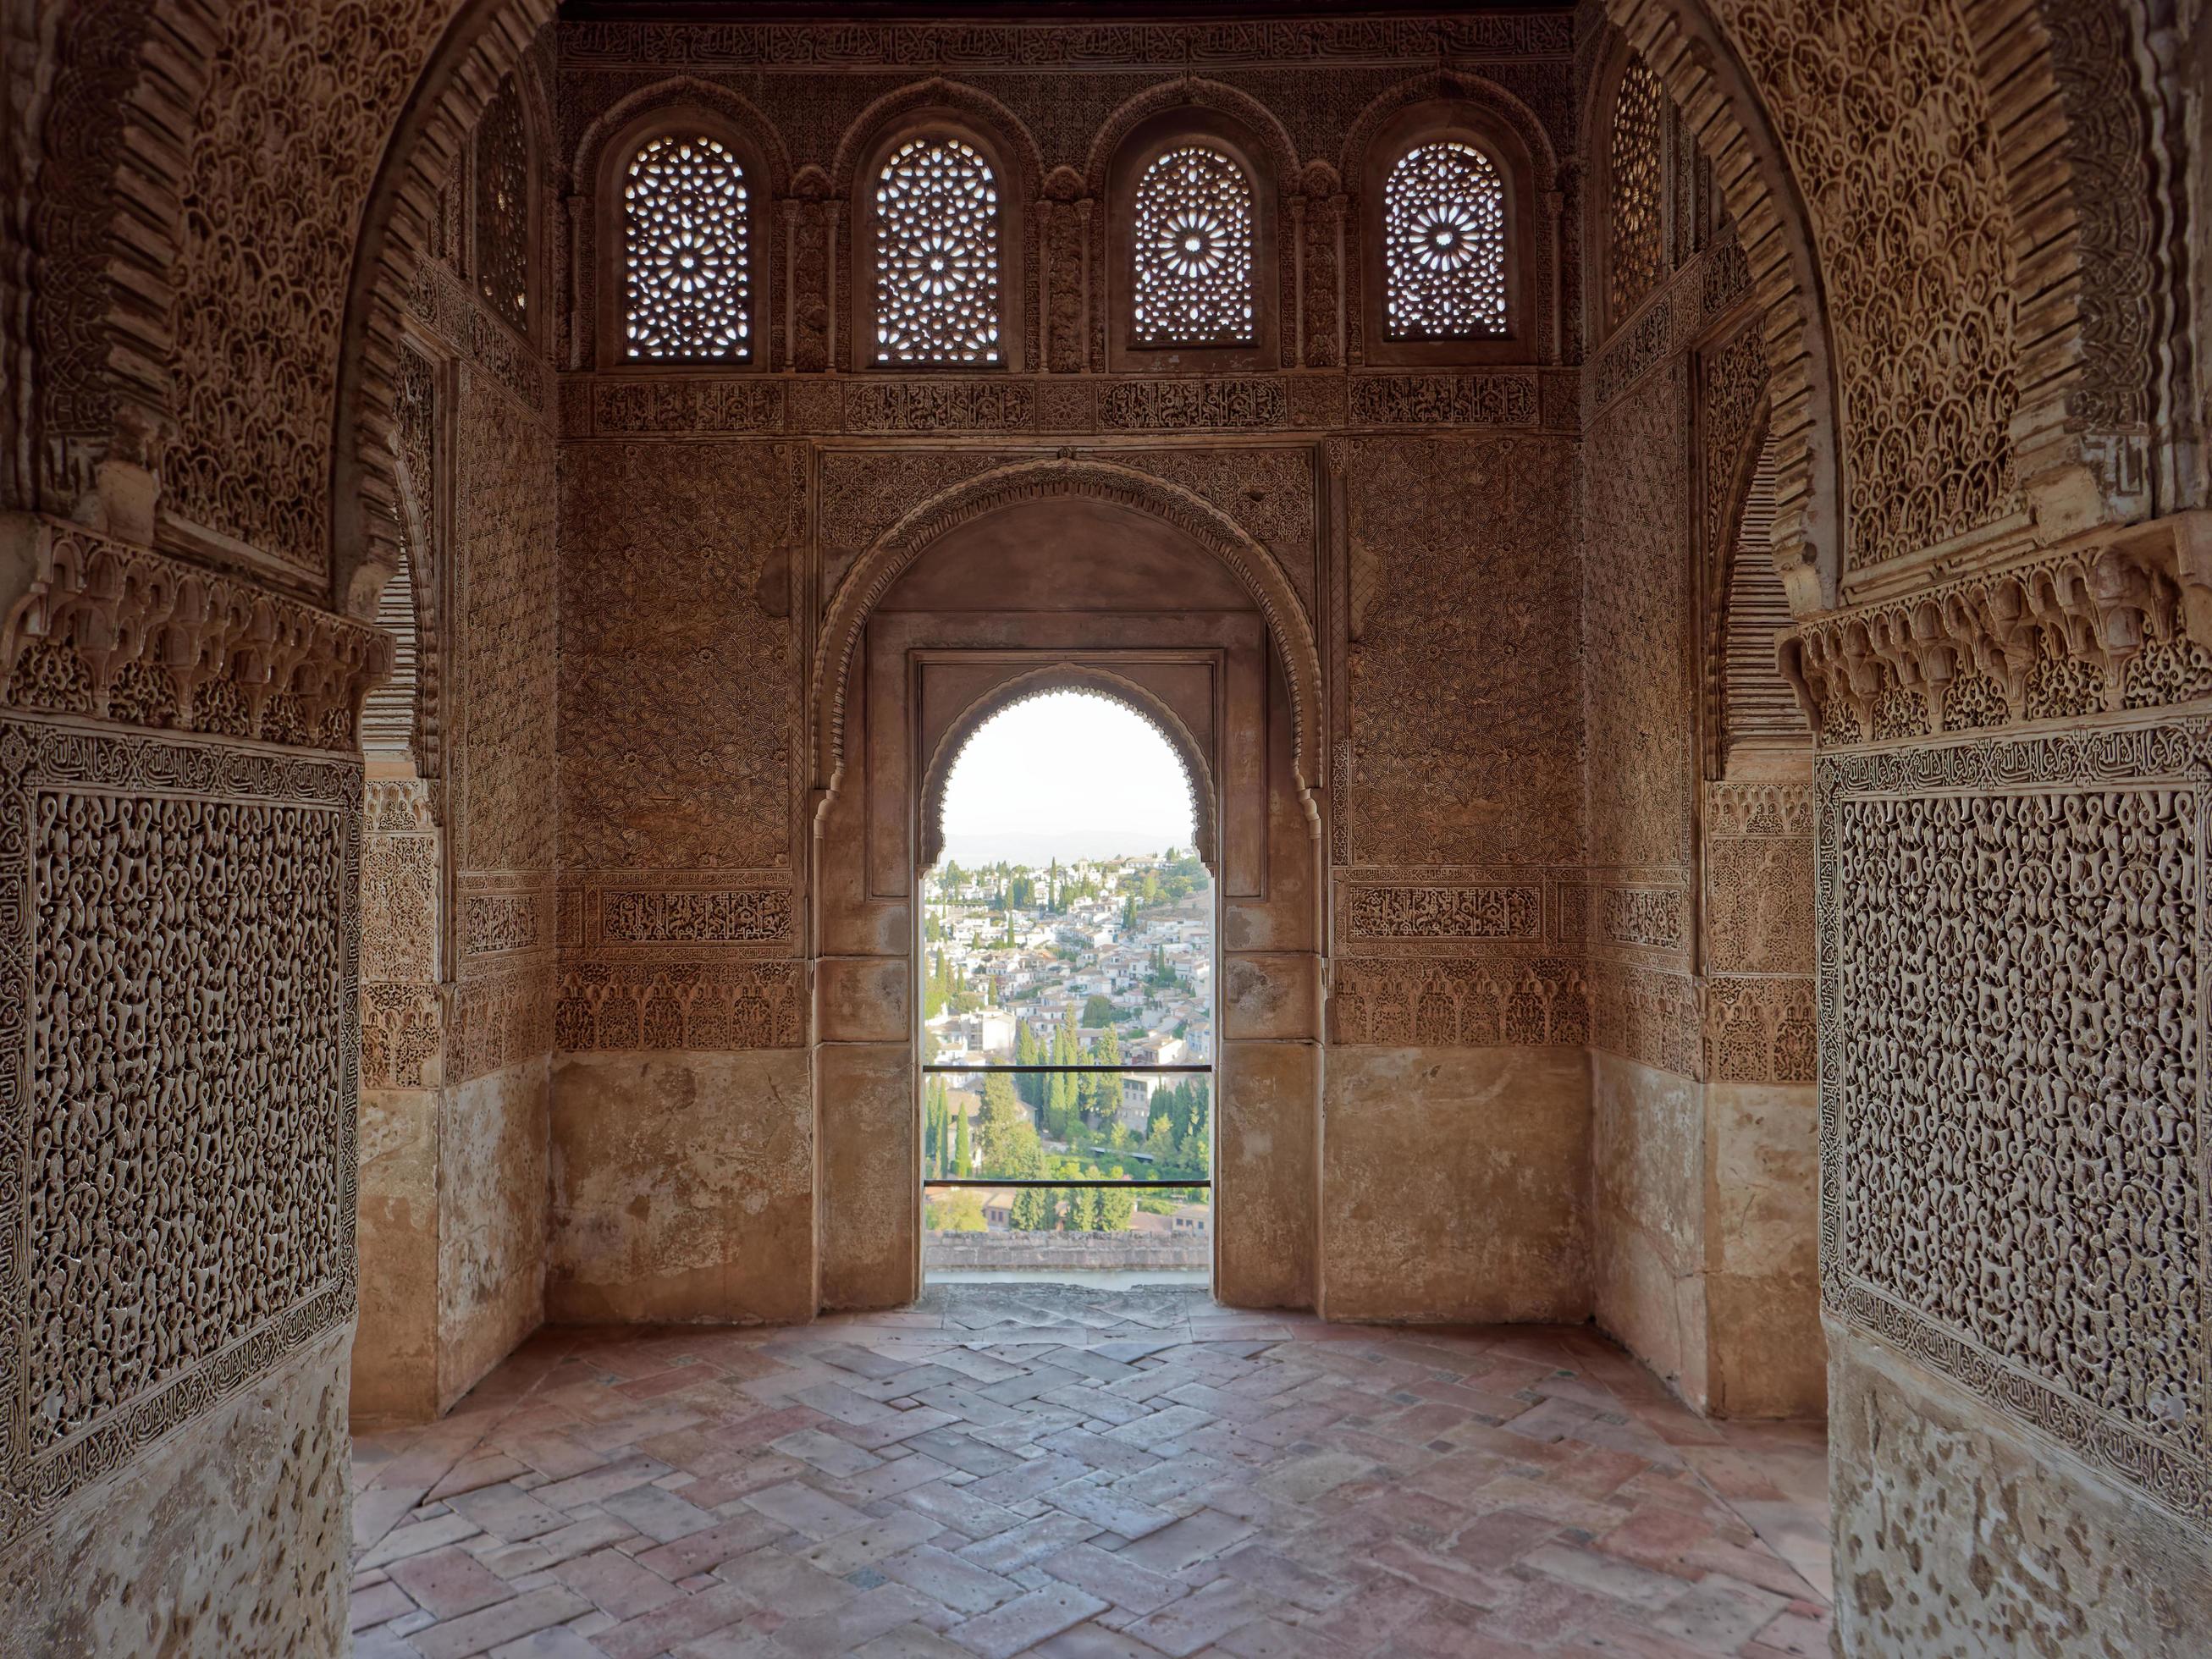 Alhambra Interior | The Alhambra Granada, Spain | Rob Shenk | Flickr